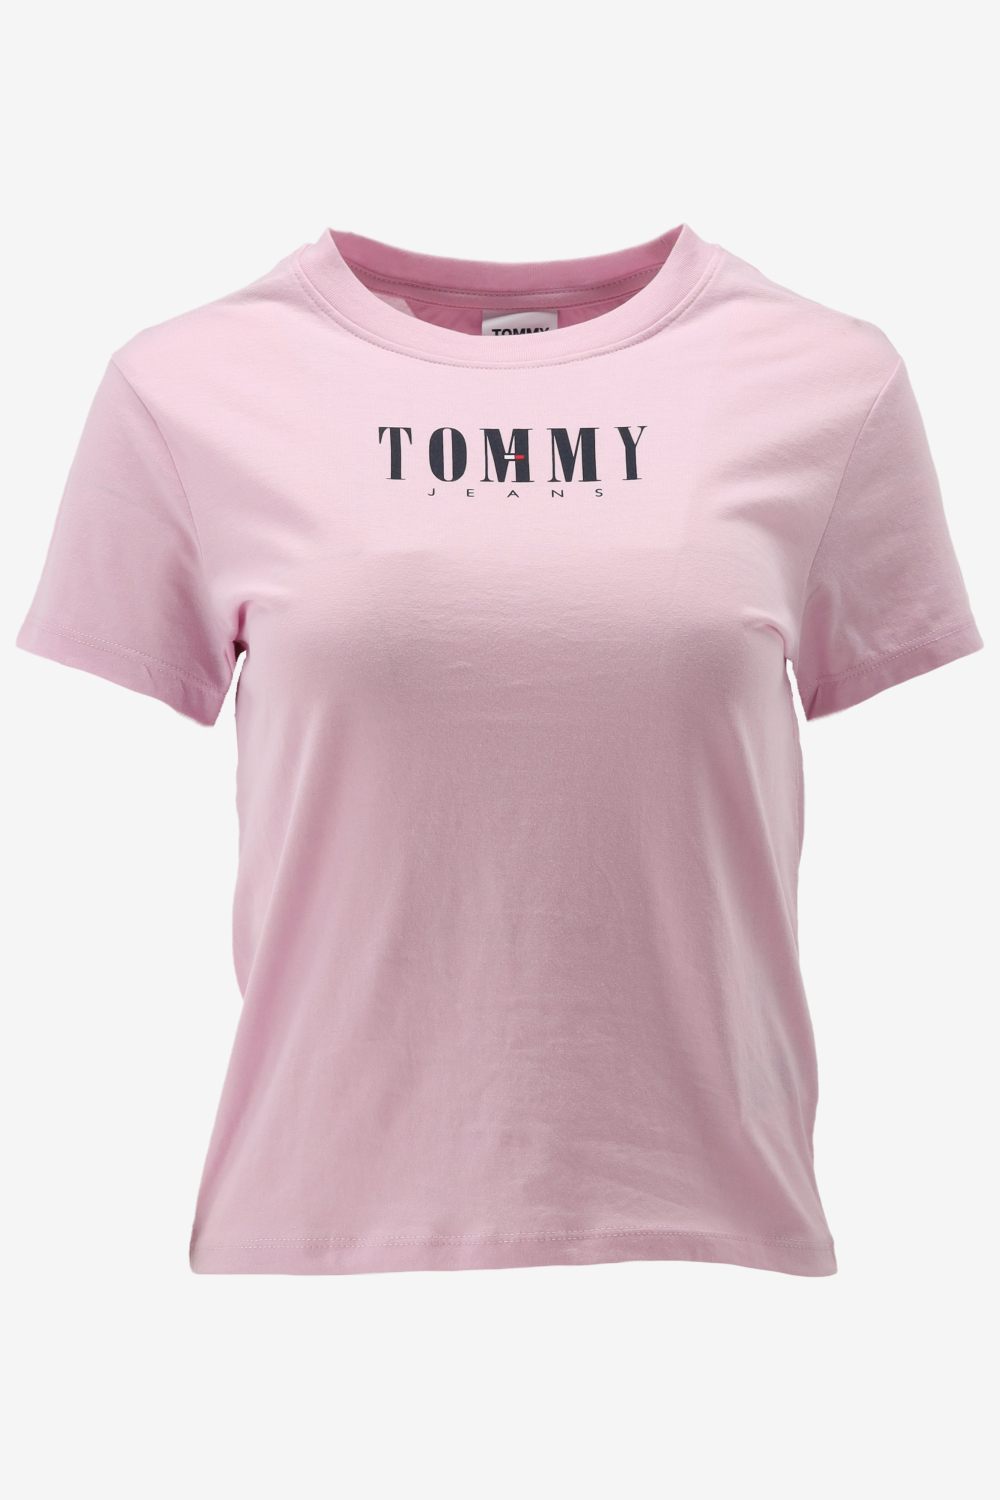 Tommy Hilfiger TJW BABY ESSENTIAL LOGO 2 SS Dames T-Shirt - Roze - Maat M